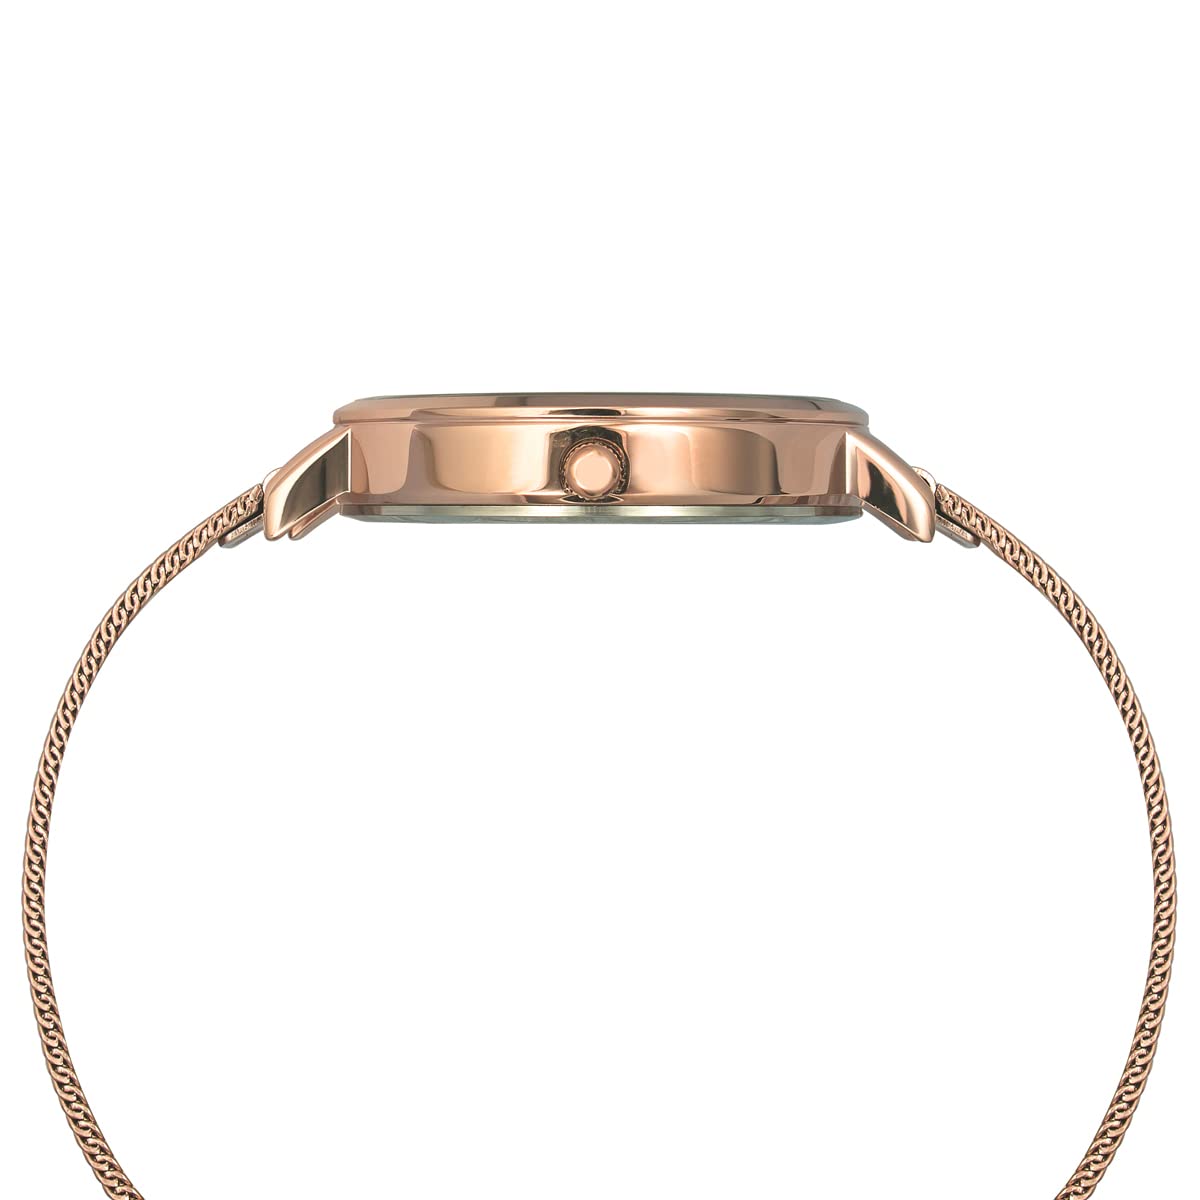 Timex Stainless Steel Analog Rose Gold Dial Women's Watch-Twel155Smu10